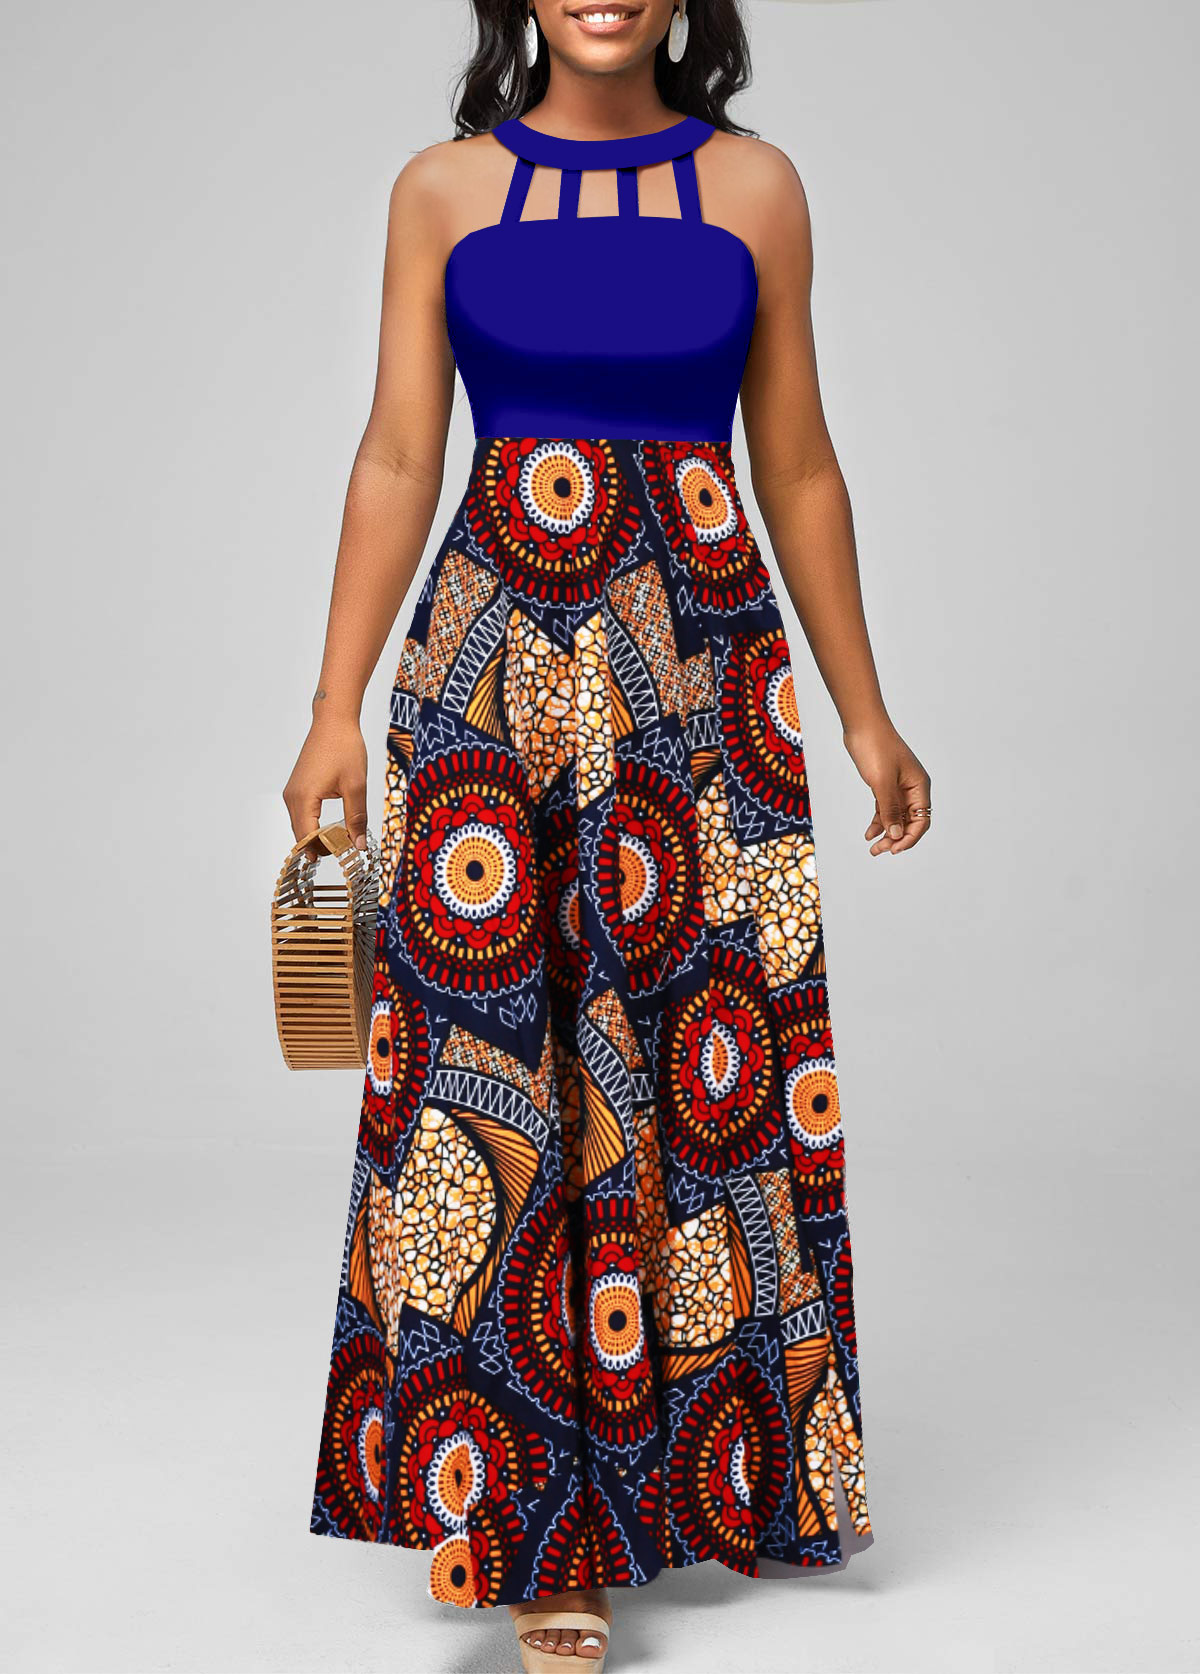 ROTITA Cage Neck African Tribal Print Navy Sleeveless Maxi Dress